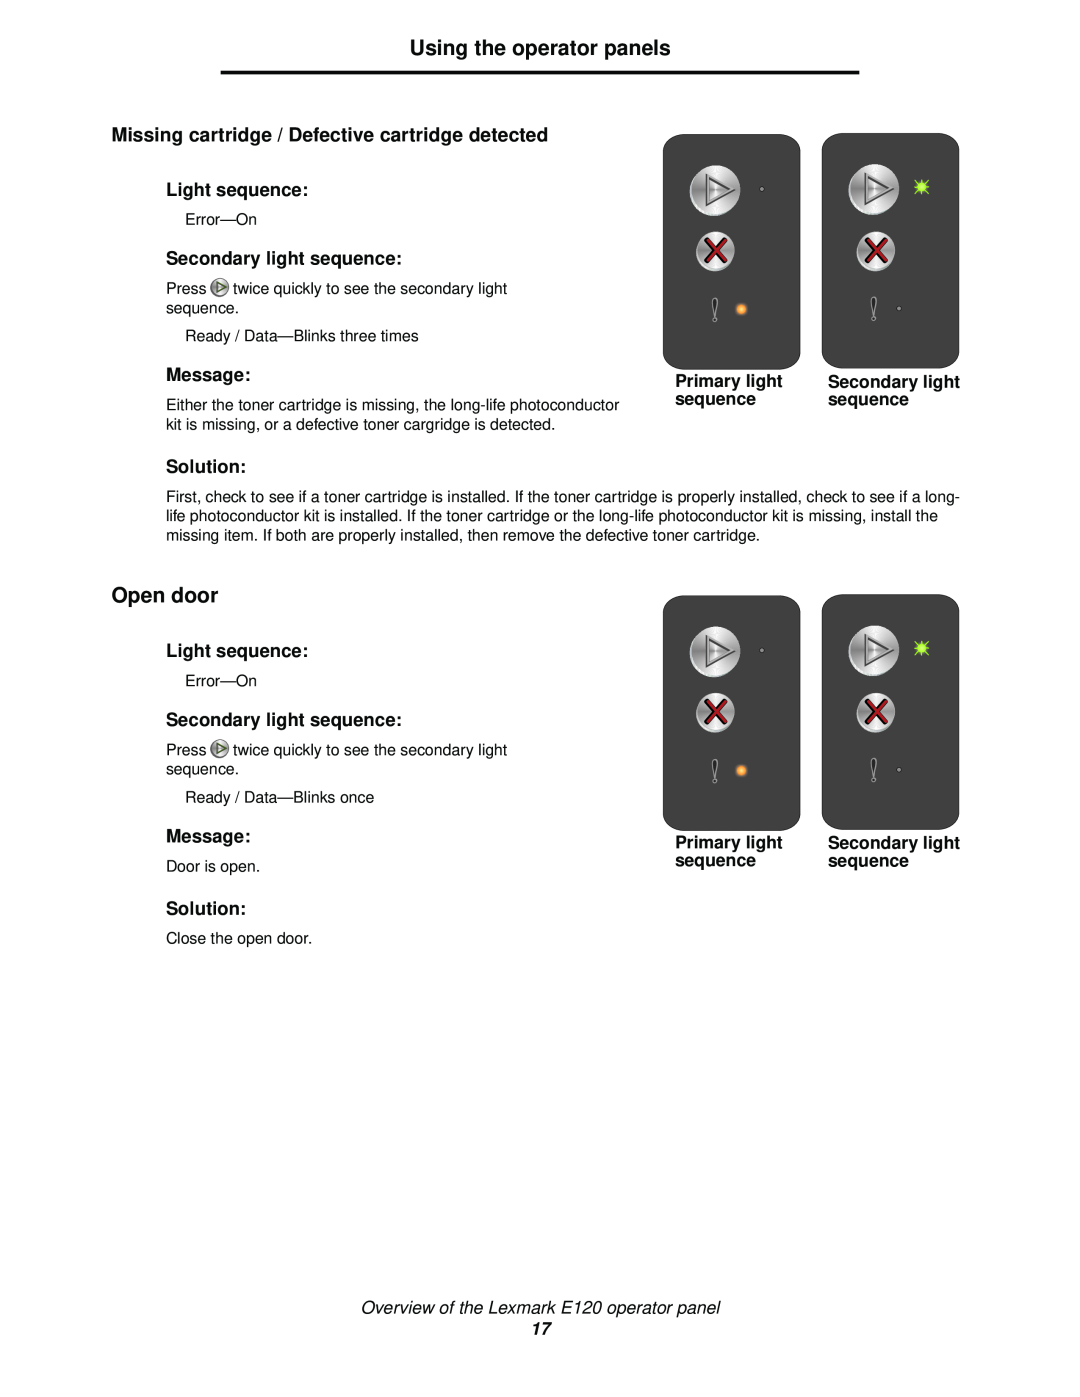 Lexmark 120 manual Open door, Missing cartridge / Defective cartridge detected, Using the operator panels, Light sequence 